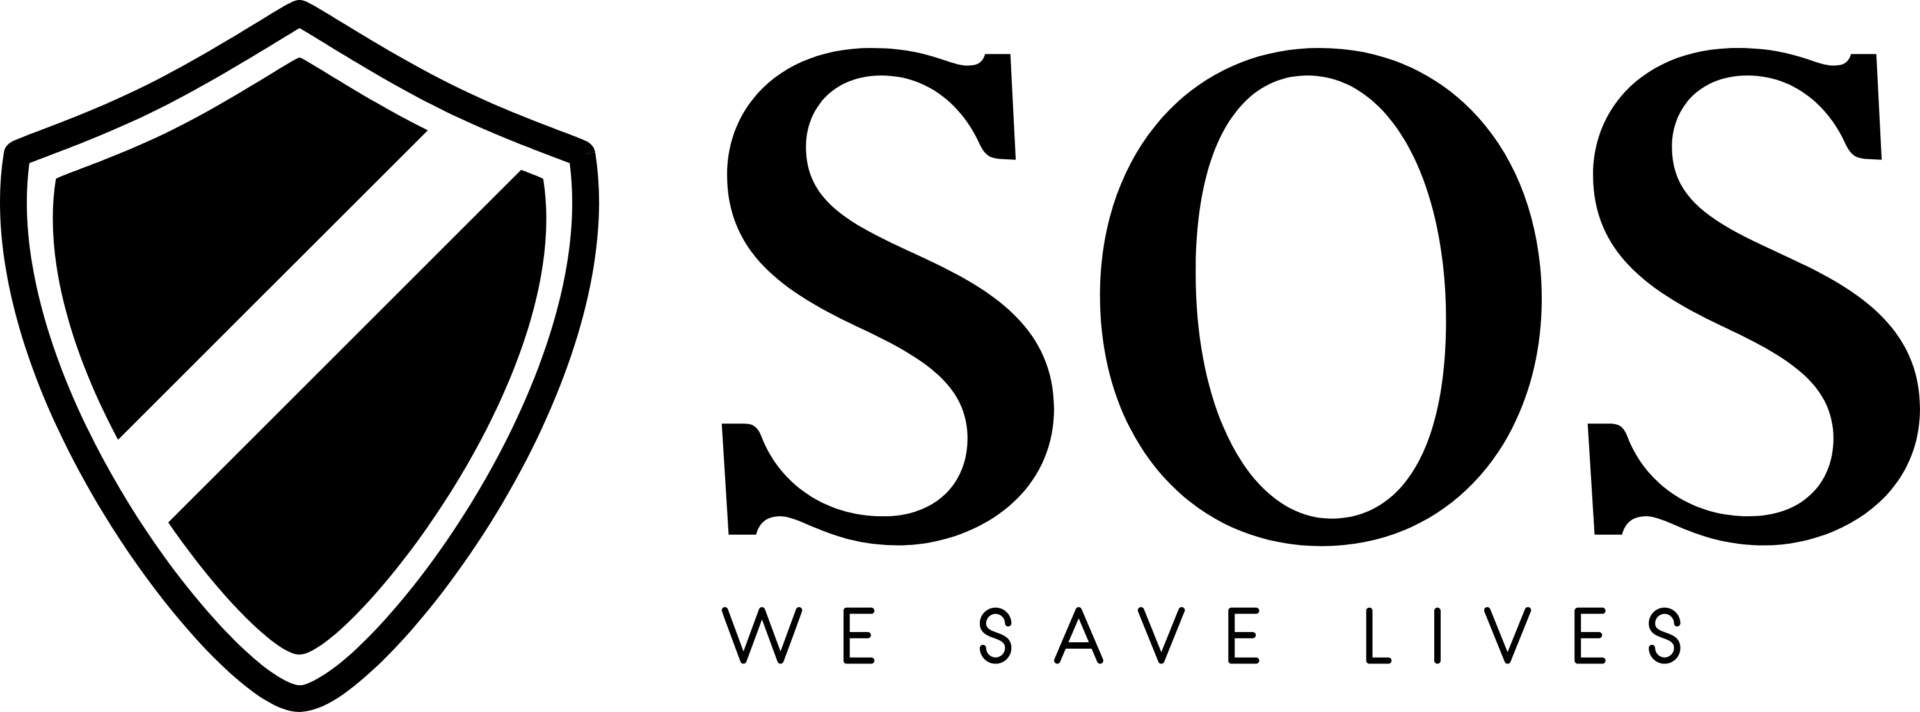 Black logo - no background (1) (1)